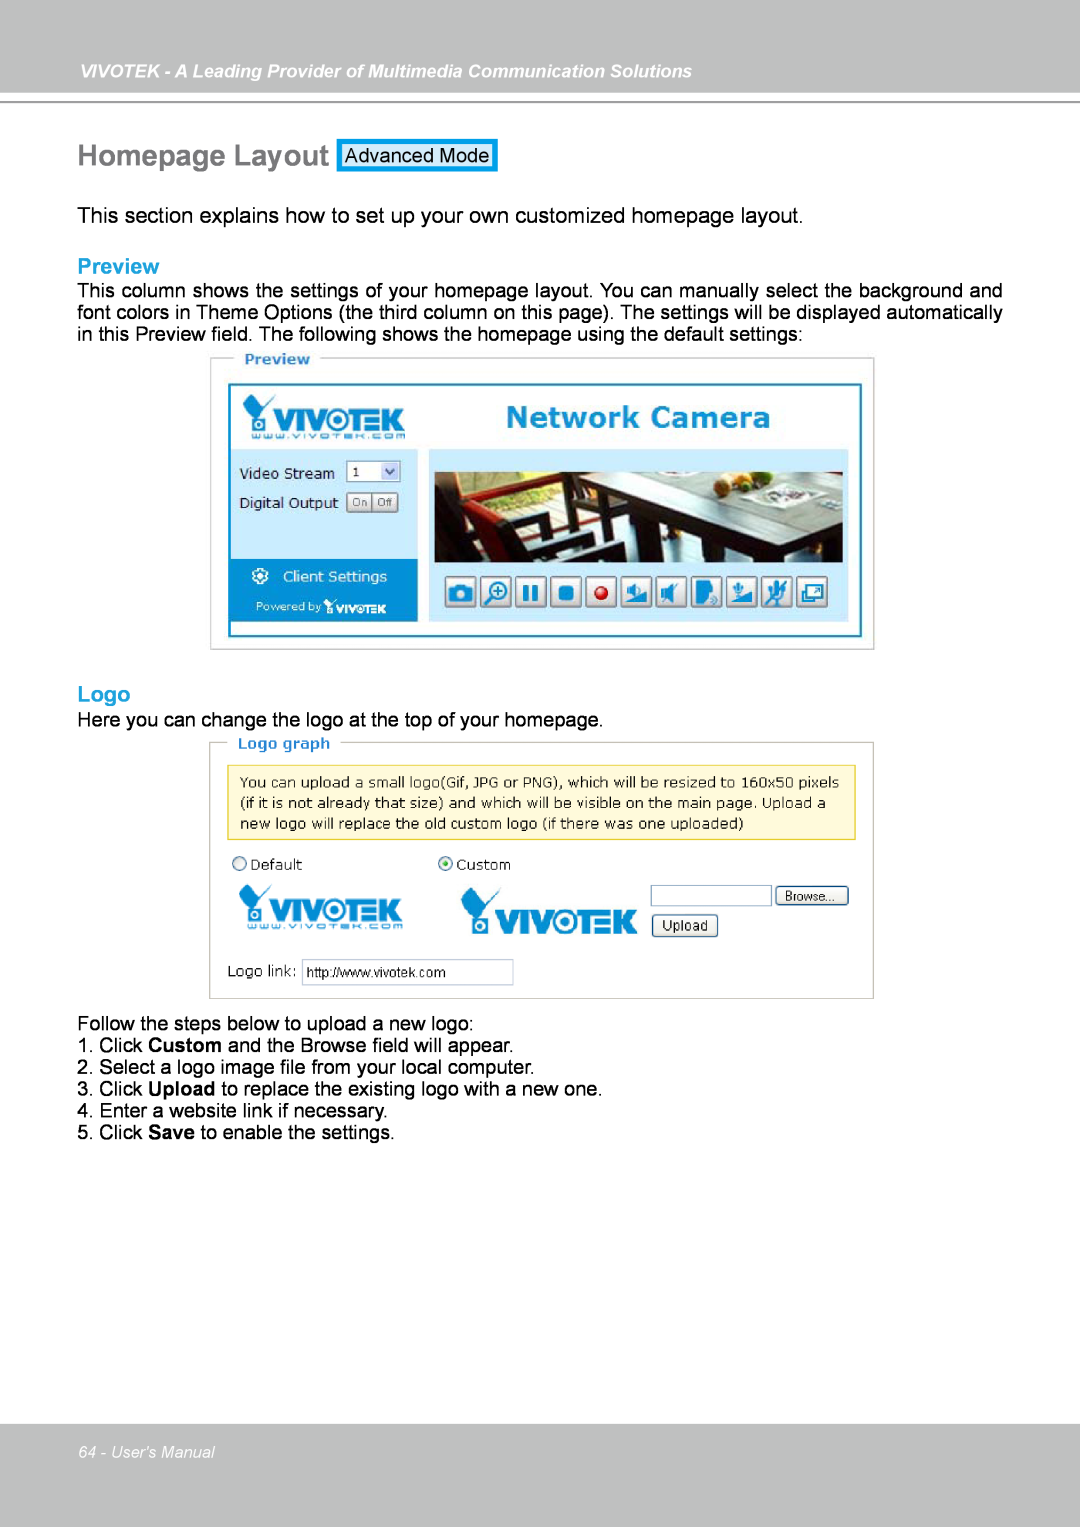 Vivotek FD7141(V) manual Homepage Layout, Preview, Logo 